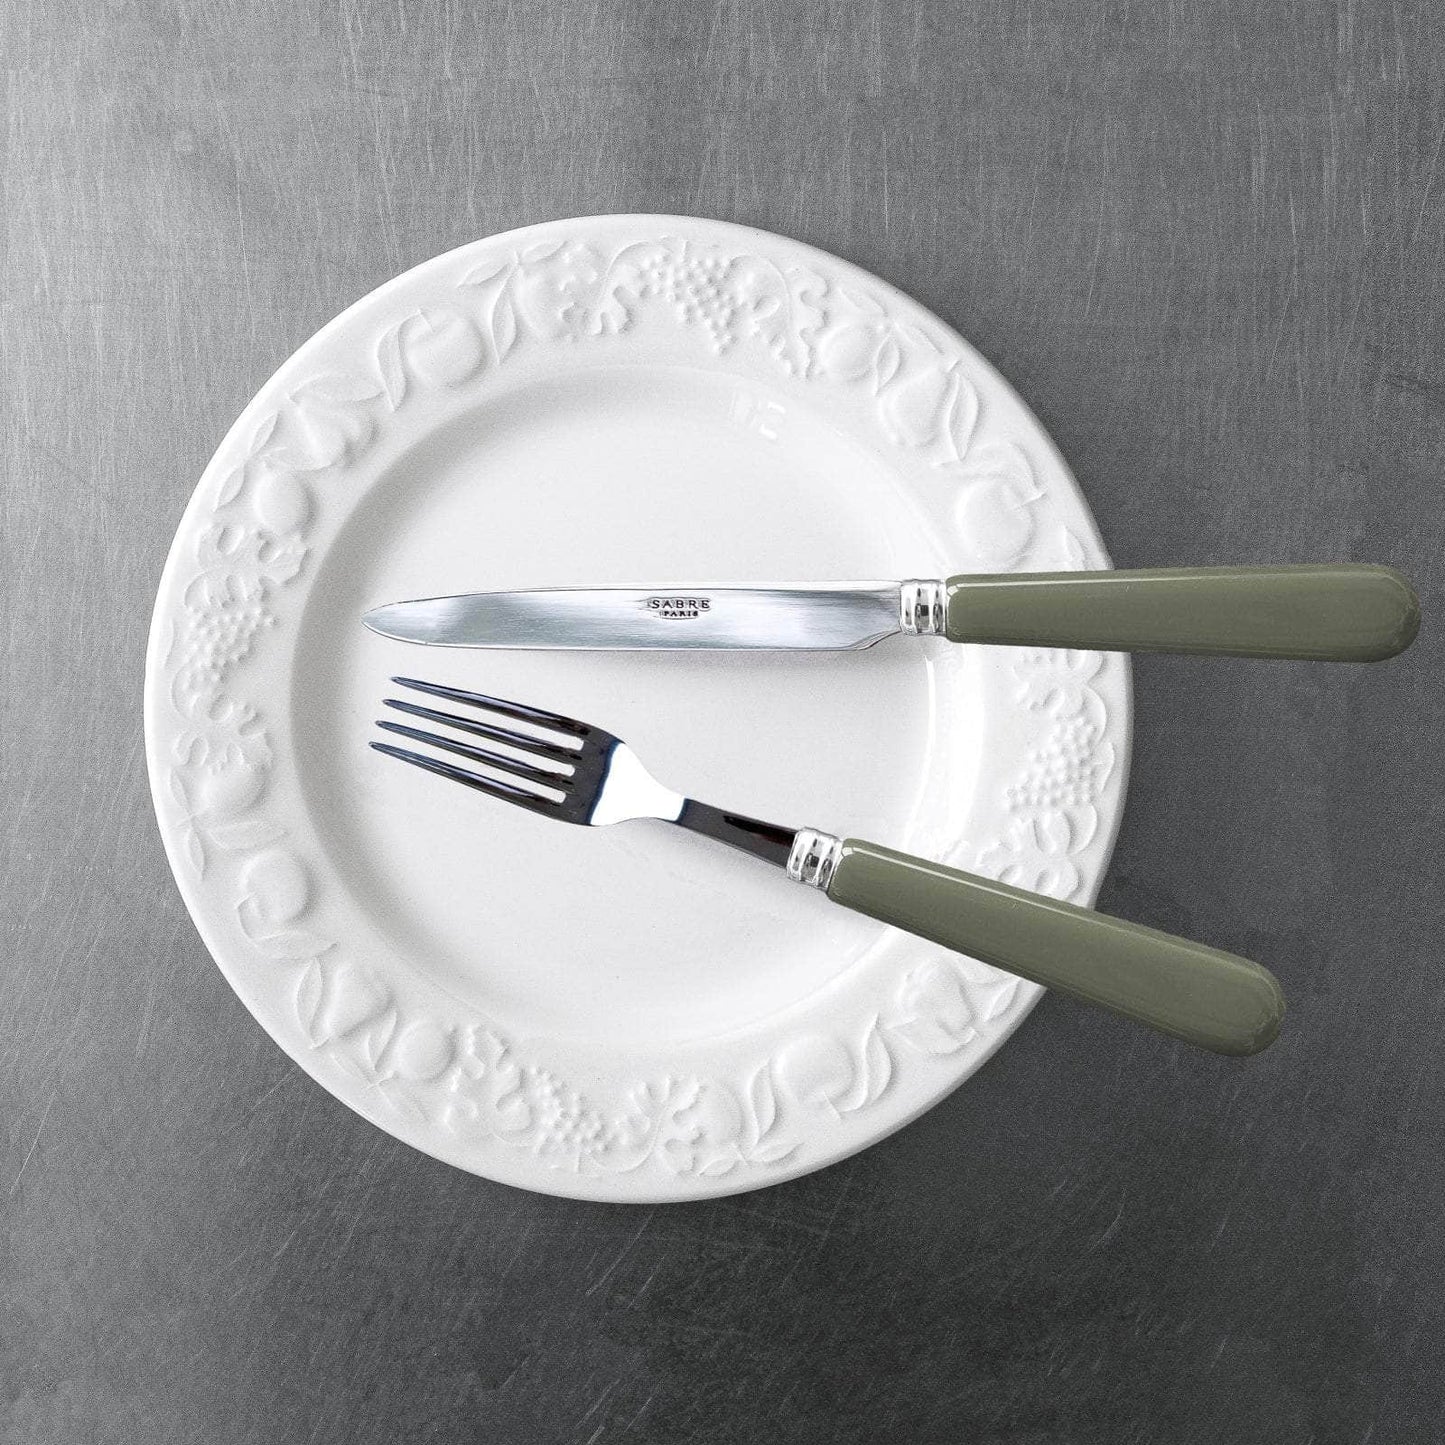 Pop unis 5 Pc Cutlery Set | Asparagus